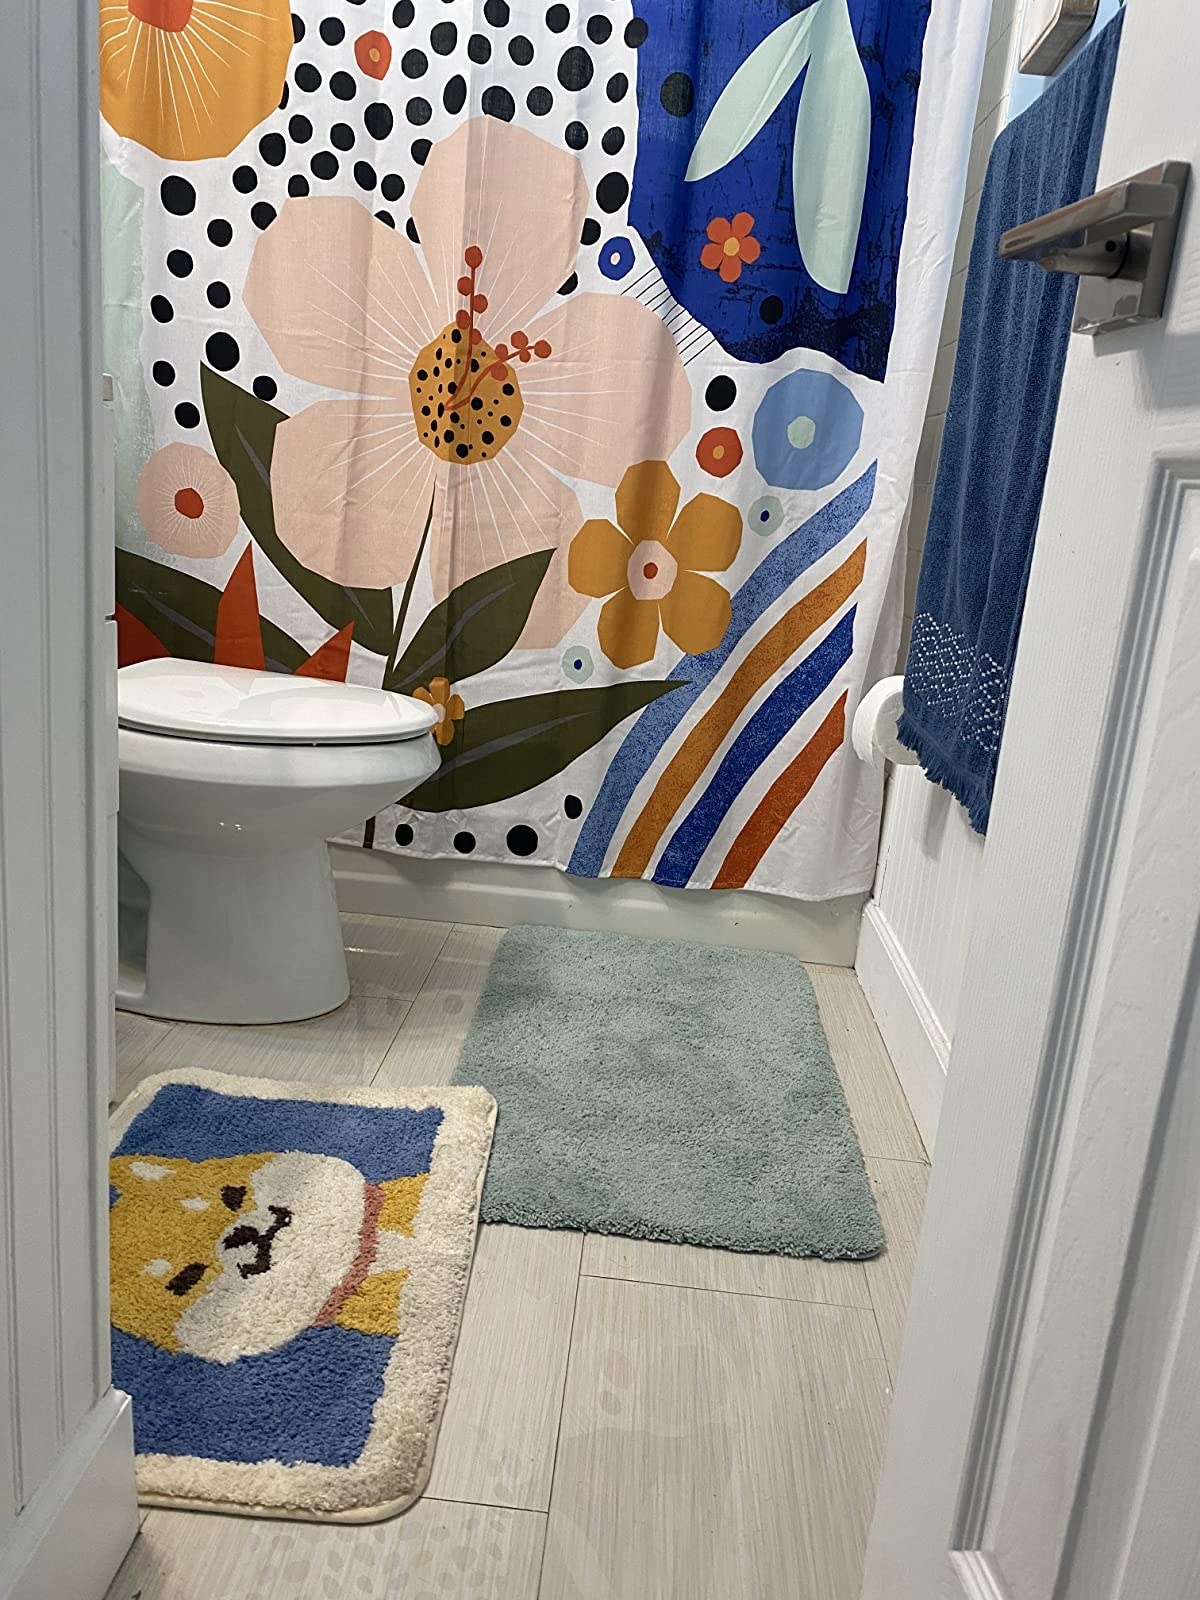 U-Shaped Contour Mat Toilet Lid Cover 20x31+16x20+16x18 T&H XHome Non-Slip Bath Rug Sets 3 Piece for Bathroom-Sky Lightning,Luxury Memory Foam Bathroom Mats